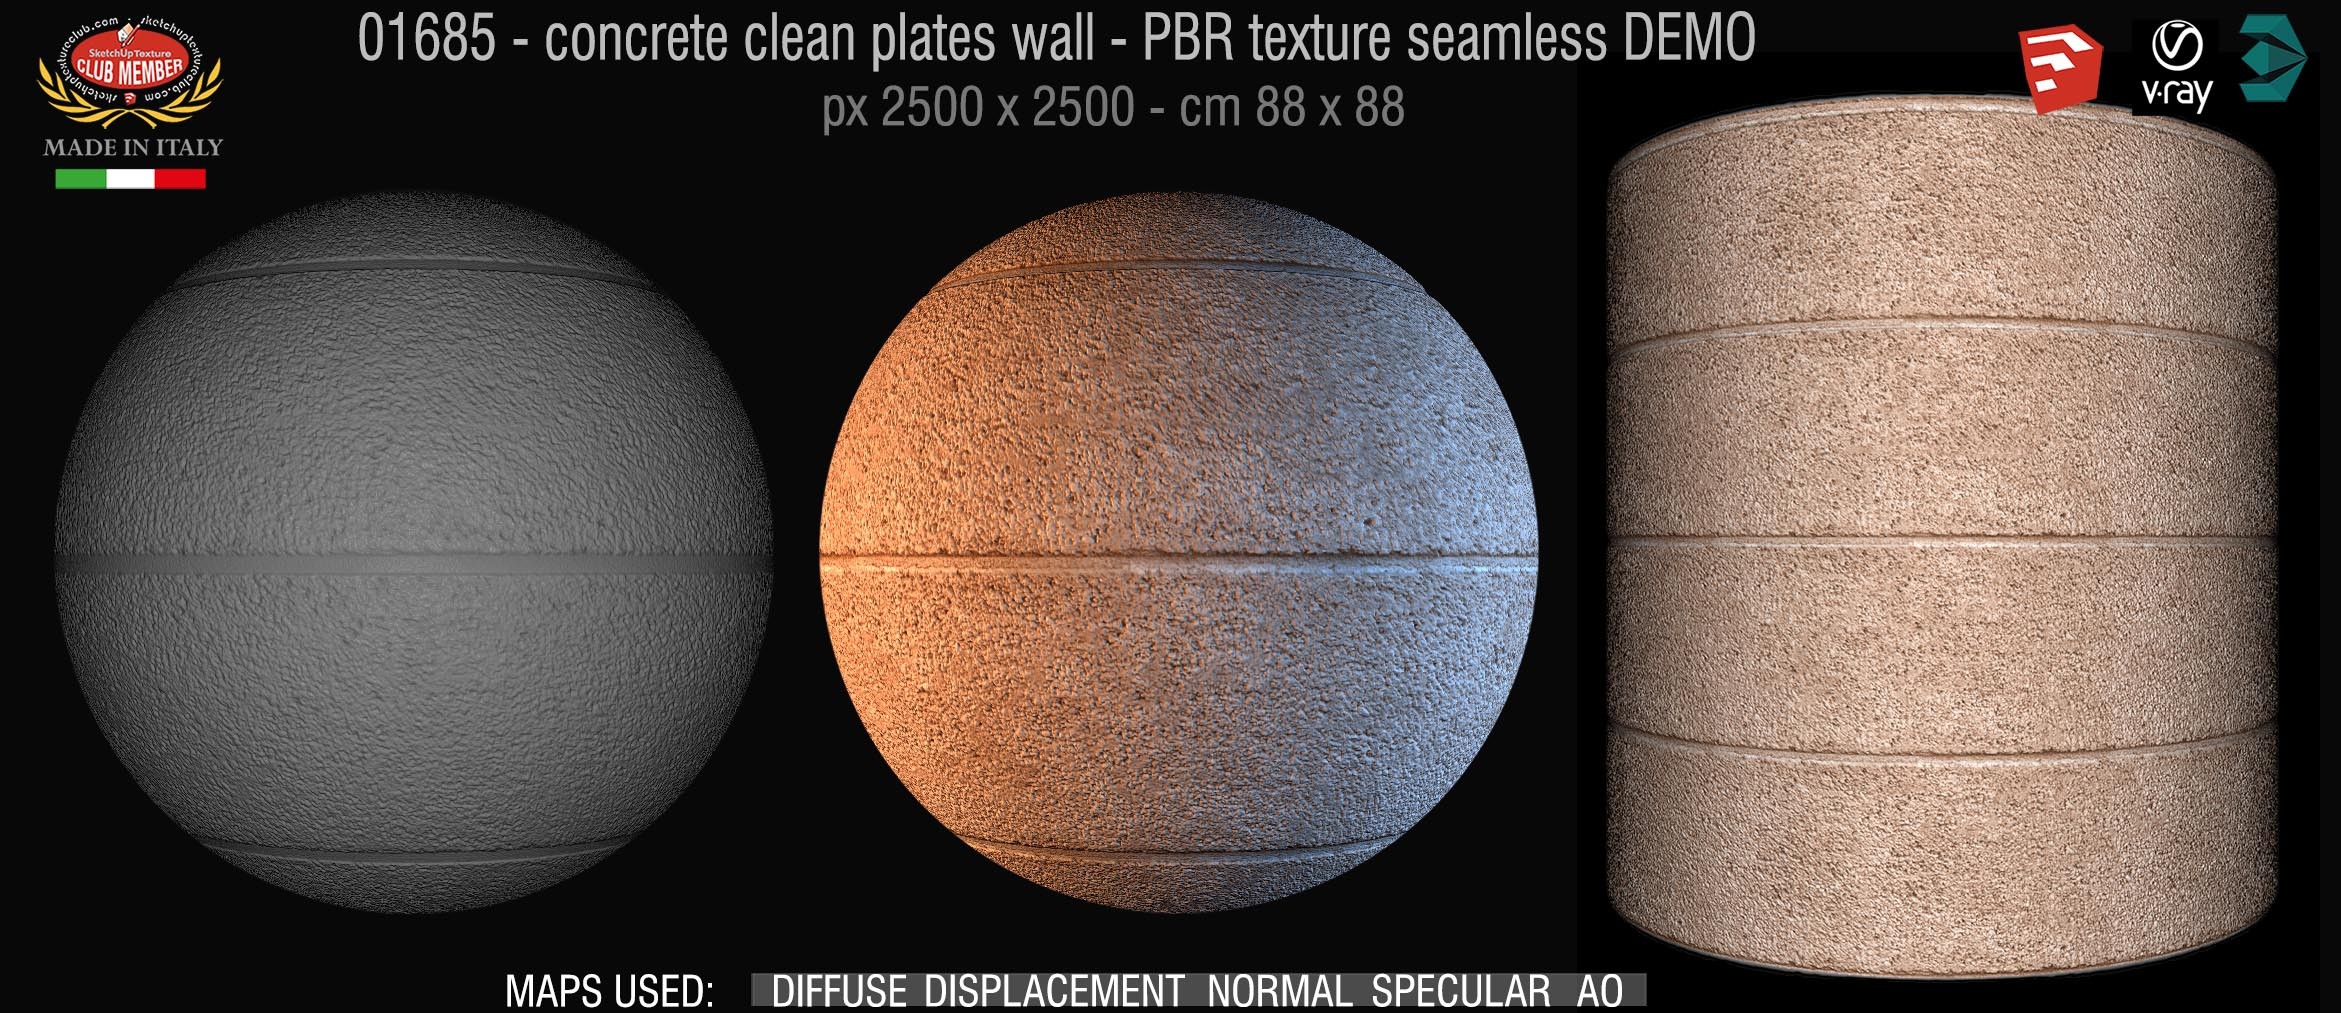 01685 concrete clean plates wall PBR texture seamless DEMO